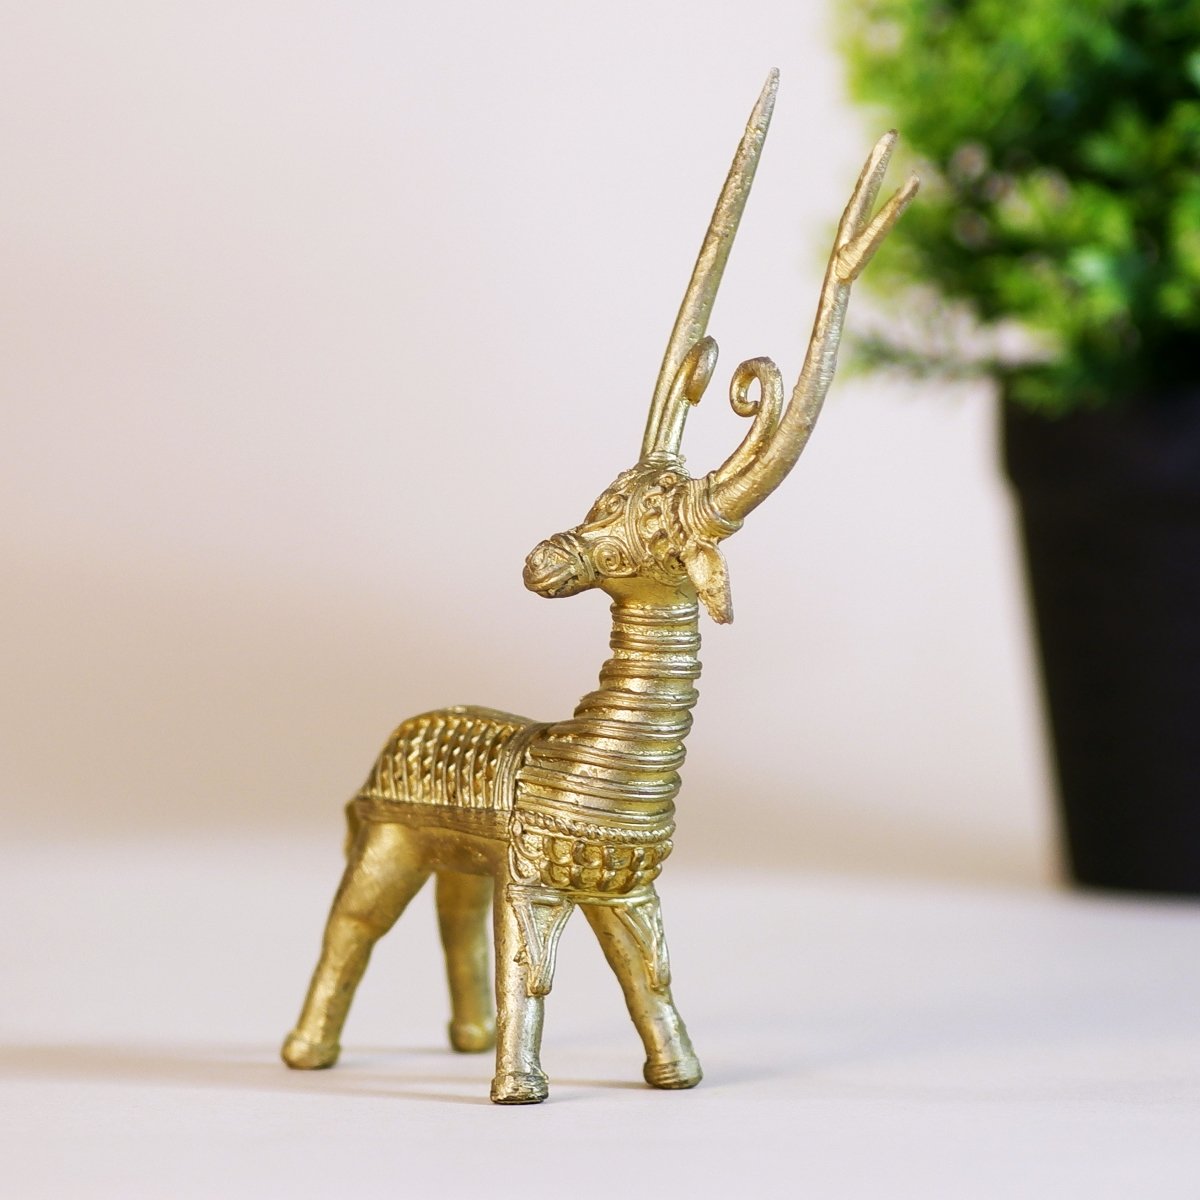 The Deer on feet - Brass Table decor- Dhokra metal craft